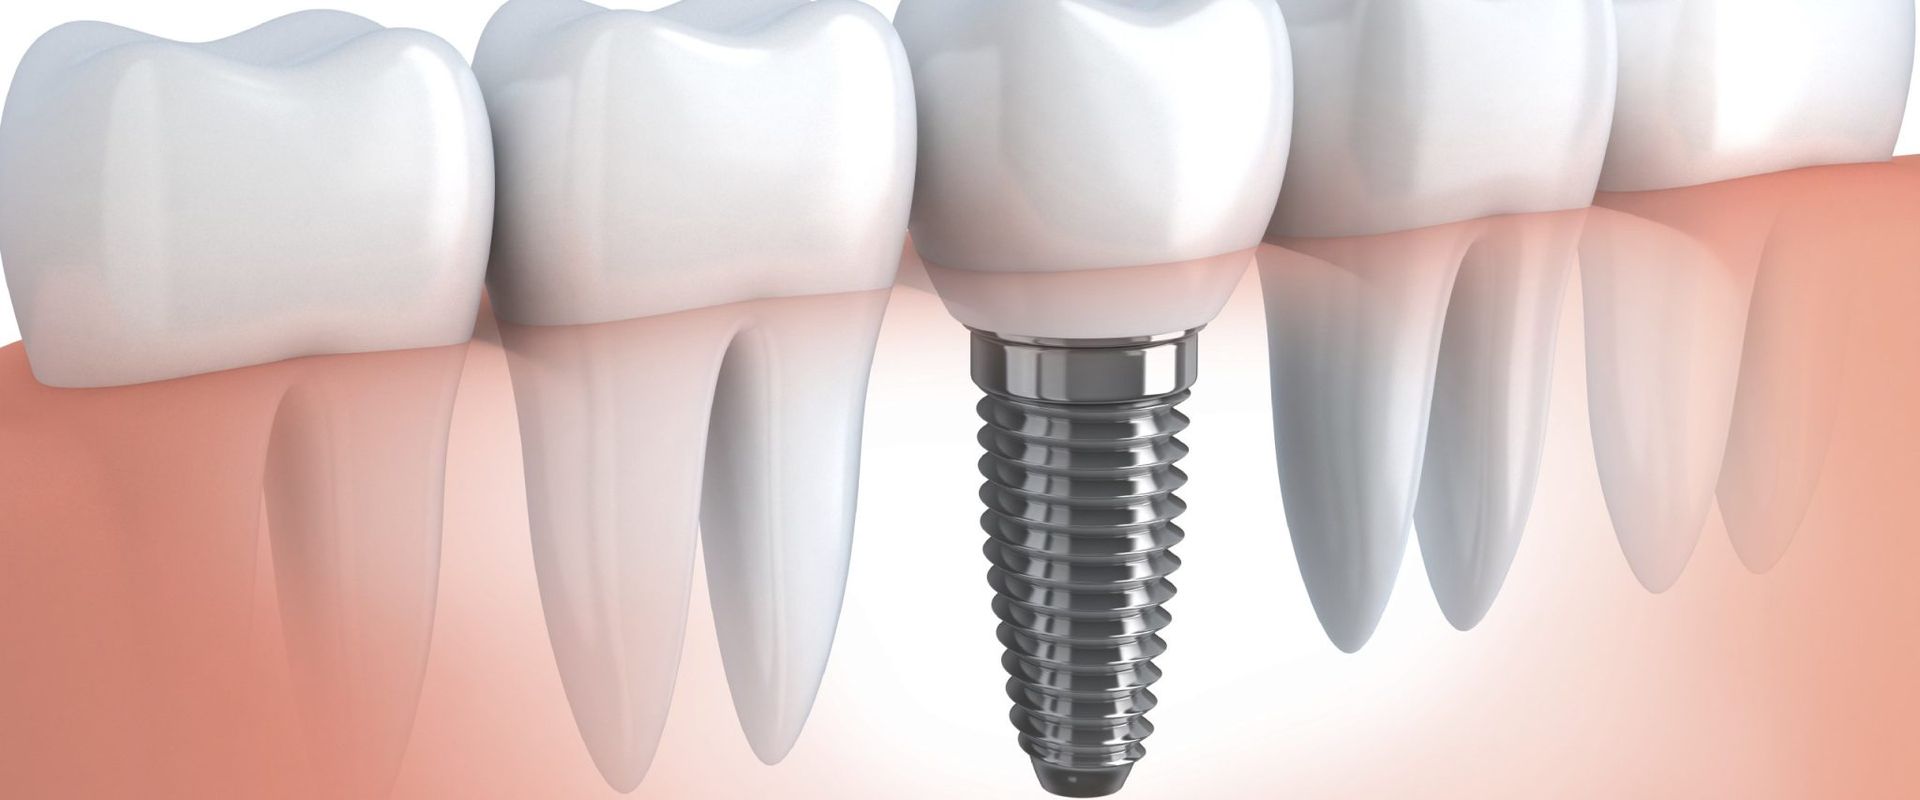 model of teeth showing a dental implant for implant restoration